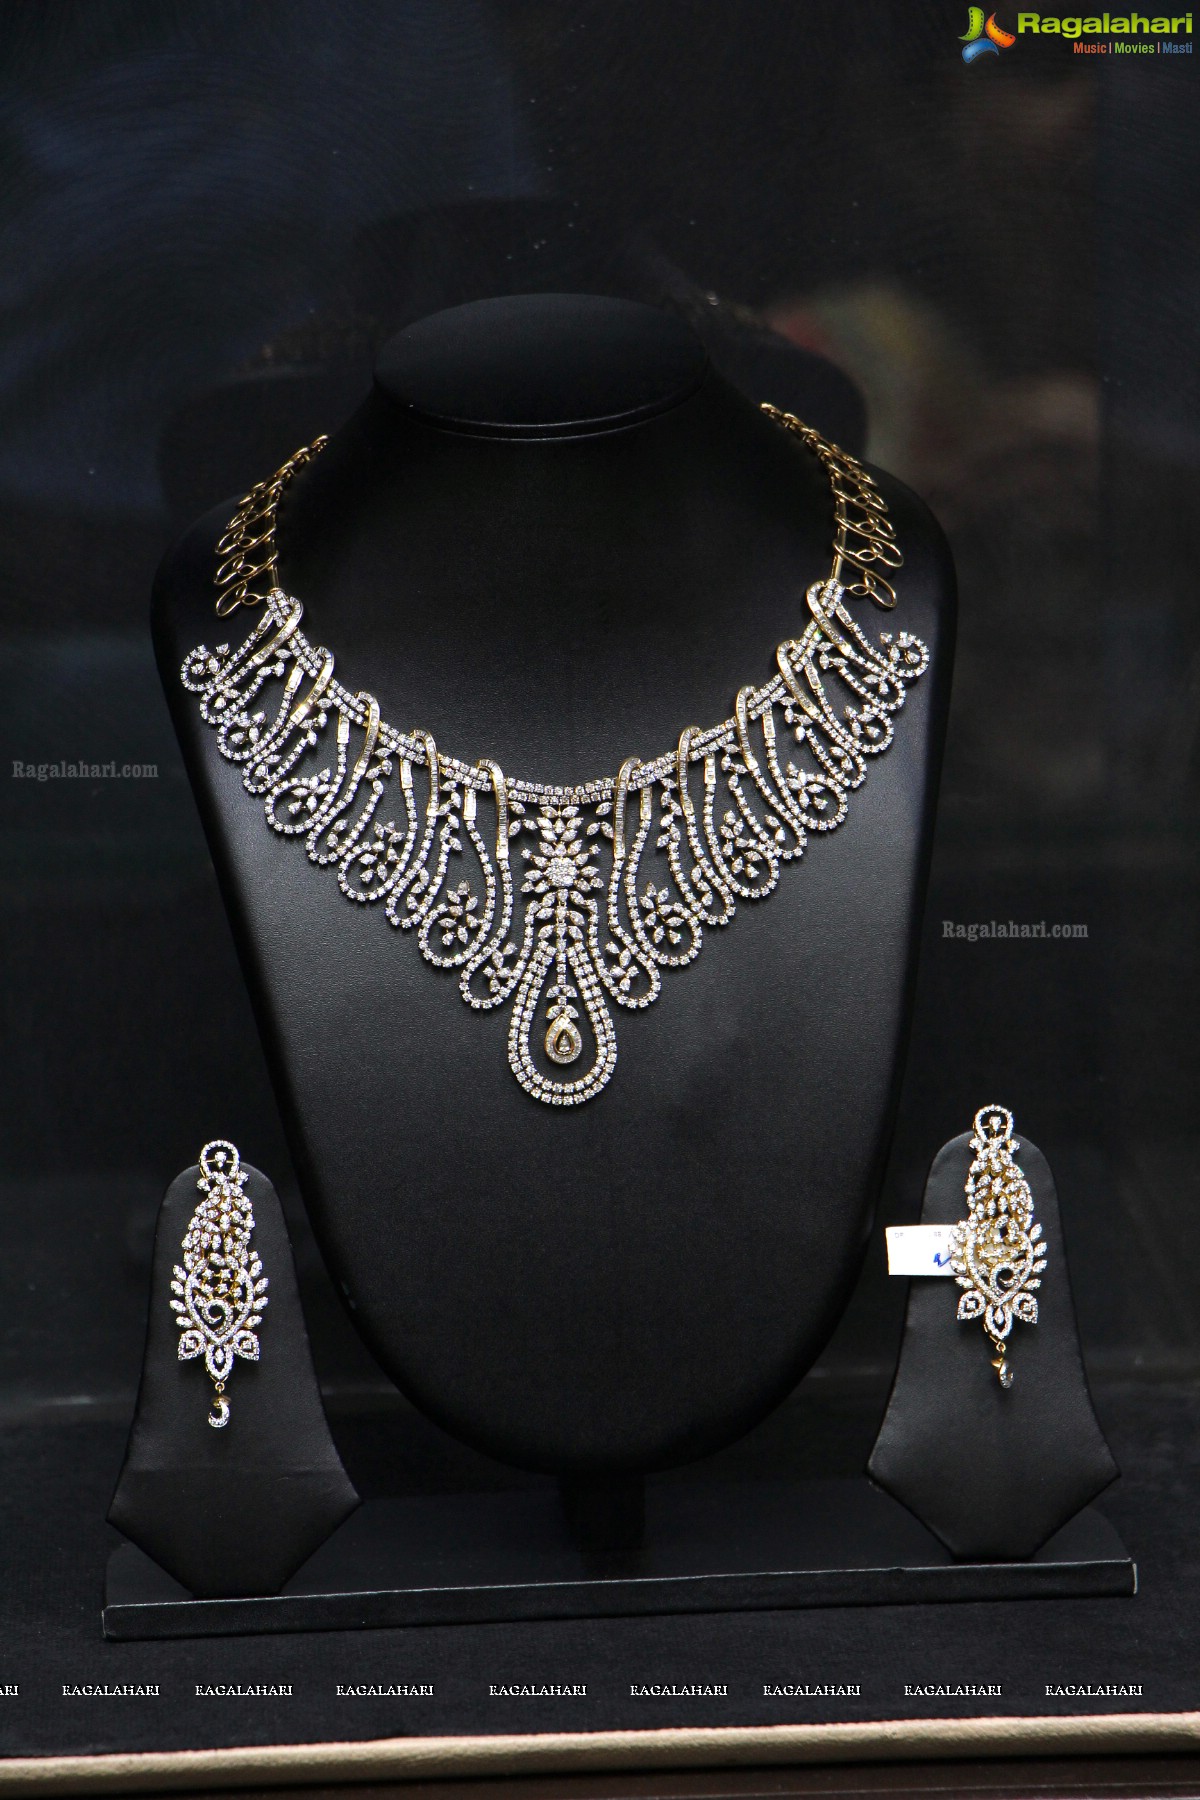 Curtain Raiser of Hiya Jewellers Diamond and Gold Masterpiece Collection Showcase